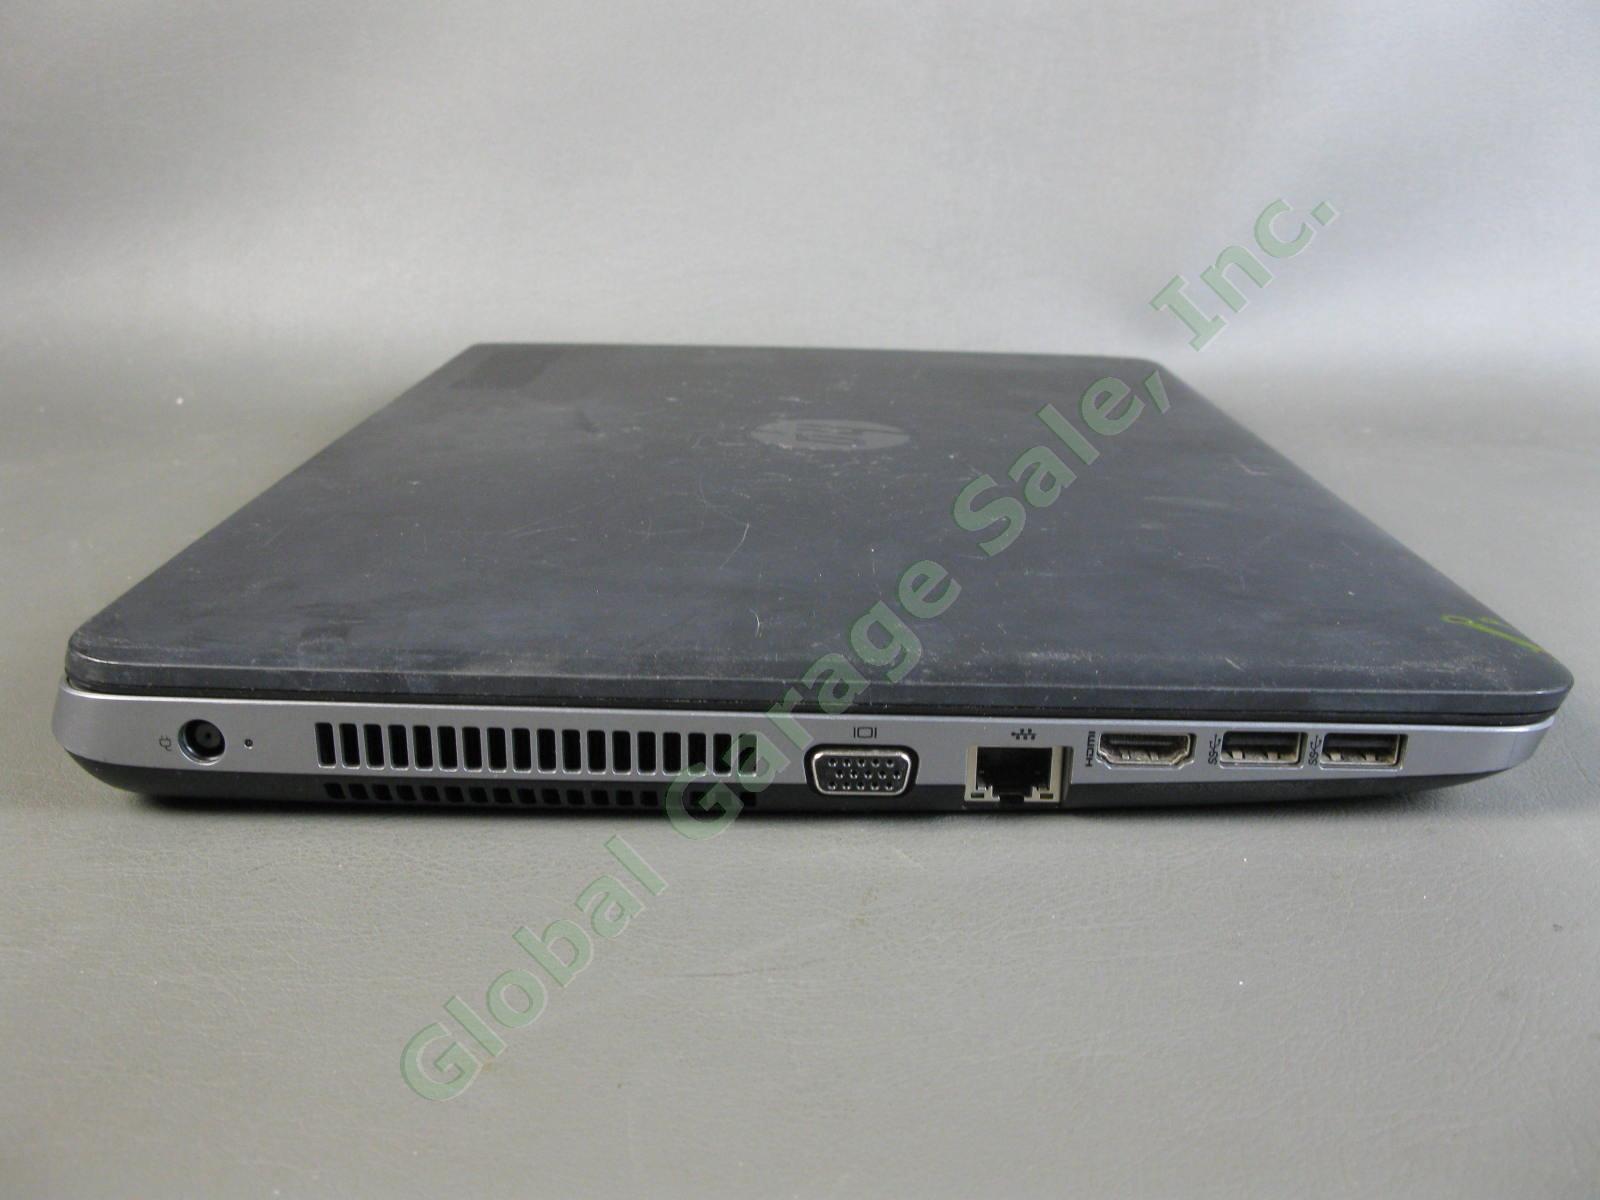 HP ProBook 450 G1 Laptop Computer i5-4200M 4GB 500GB Win10 WIFI DVD Webcam Power 3